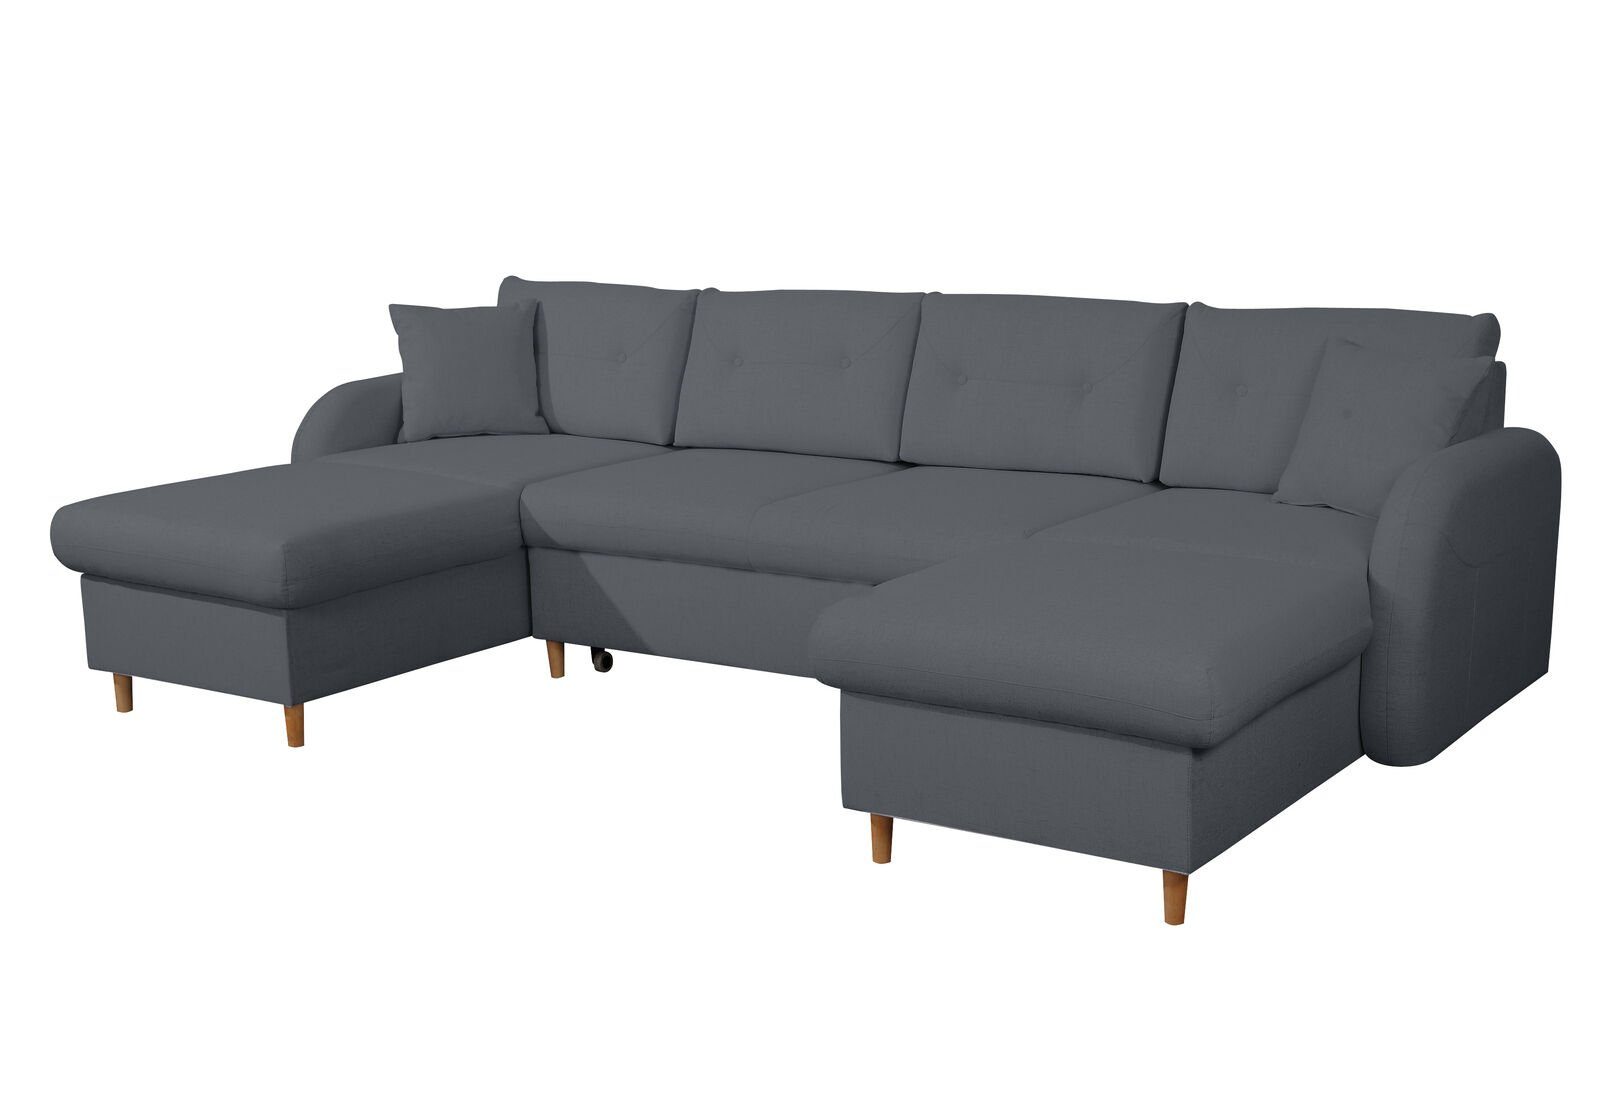 JVmoebel Ecksofa Wohnlandschaft Ecksofa Stoff U-Form Bettfunktion Couch Design, Made in Europe Schwarz